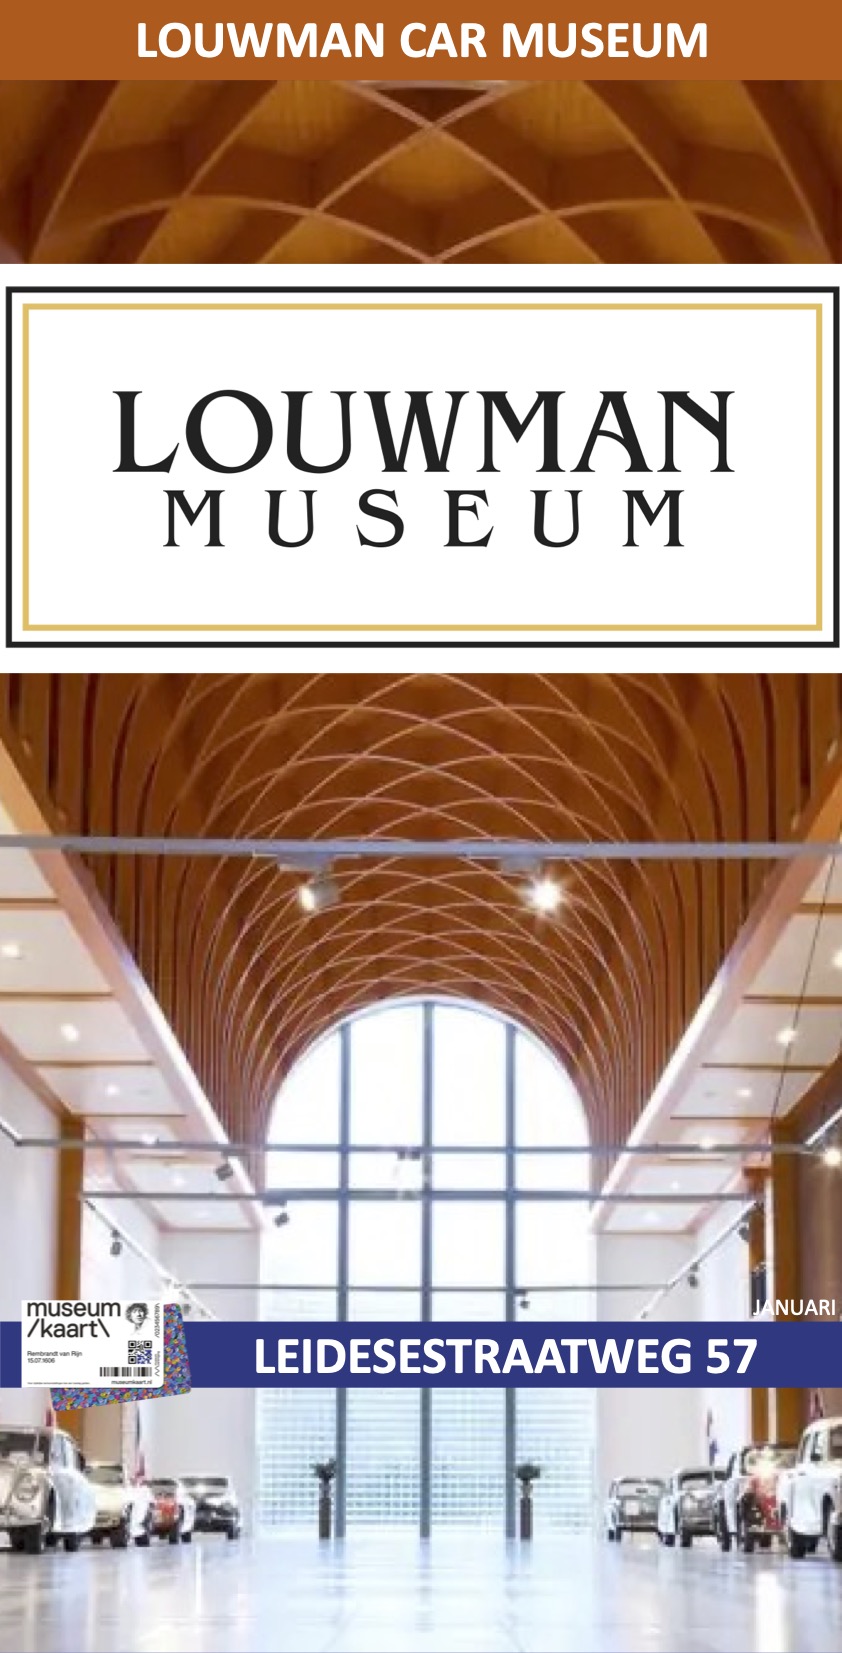 Louwman Automuseum Wassenaar Museumkaart januari